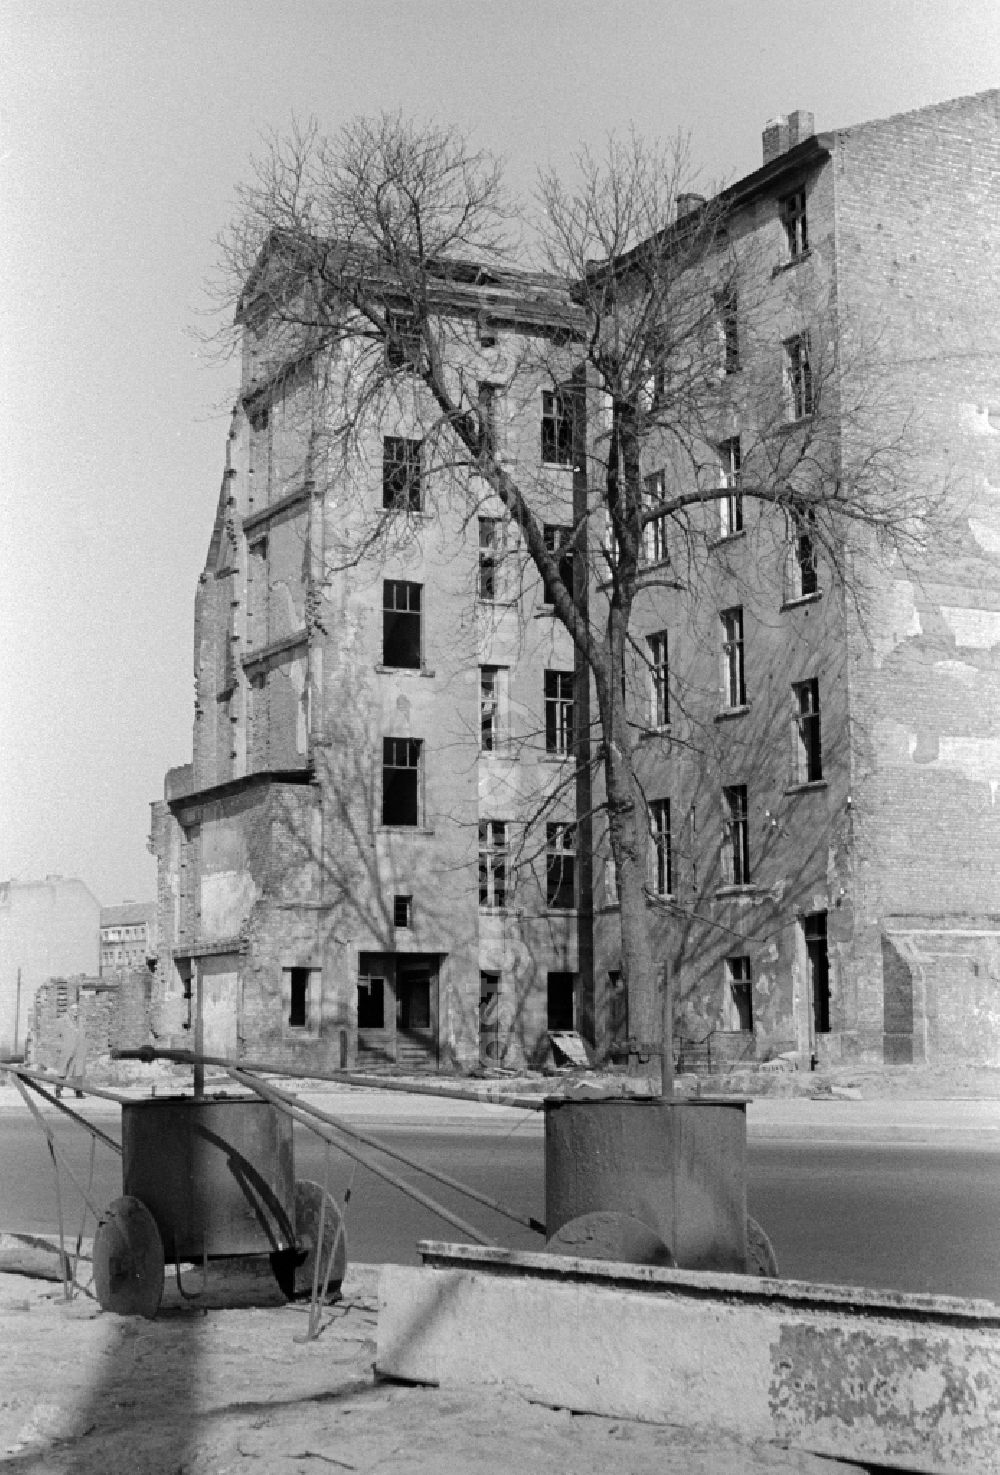 Berlin: Empty old building in Berlin, the former capital of the GDR, German Democratic Republic